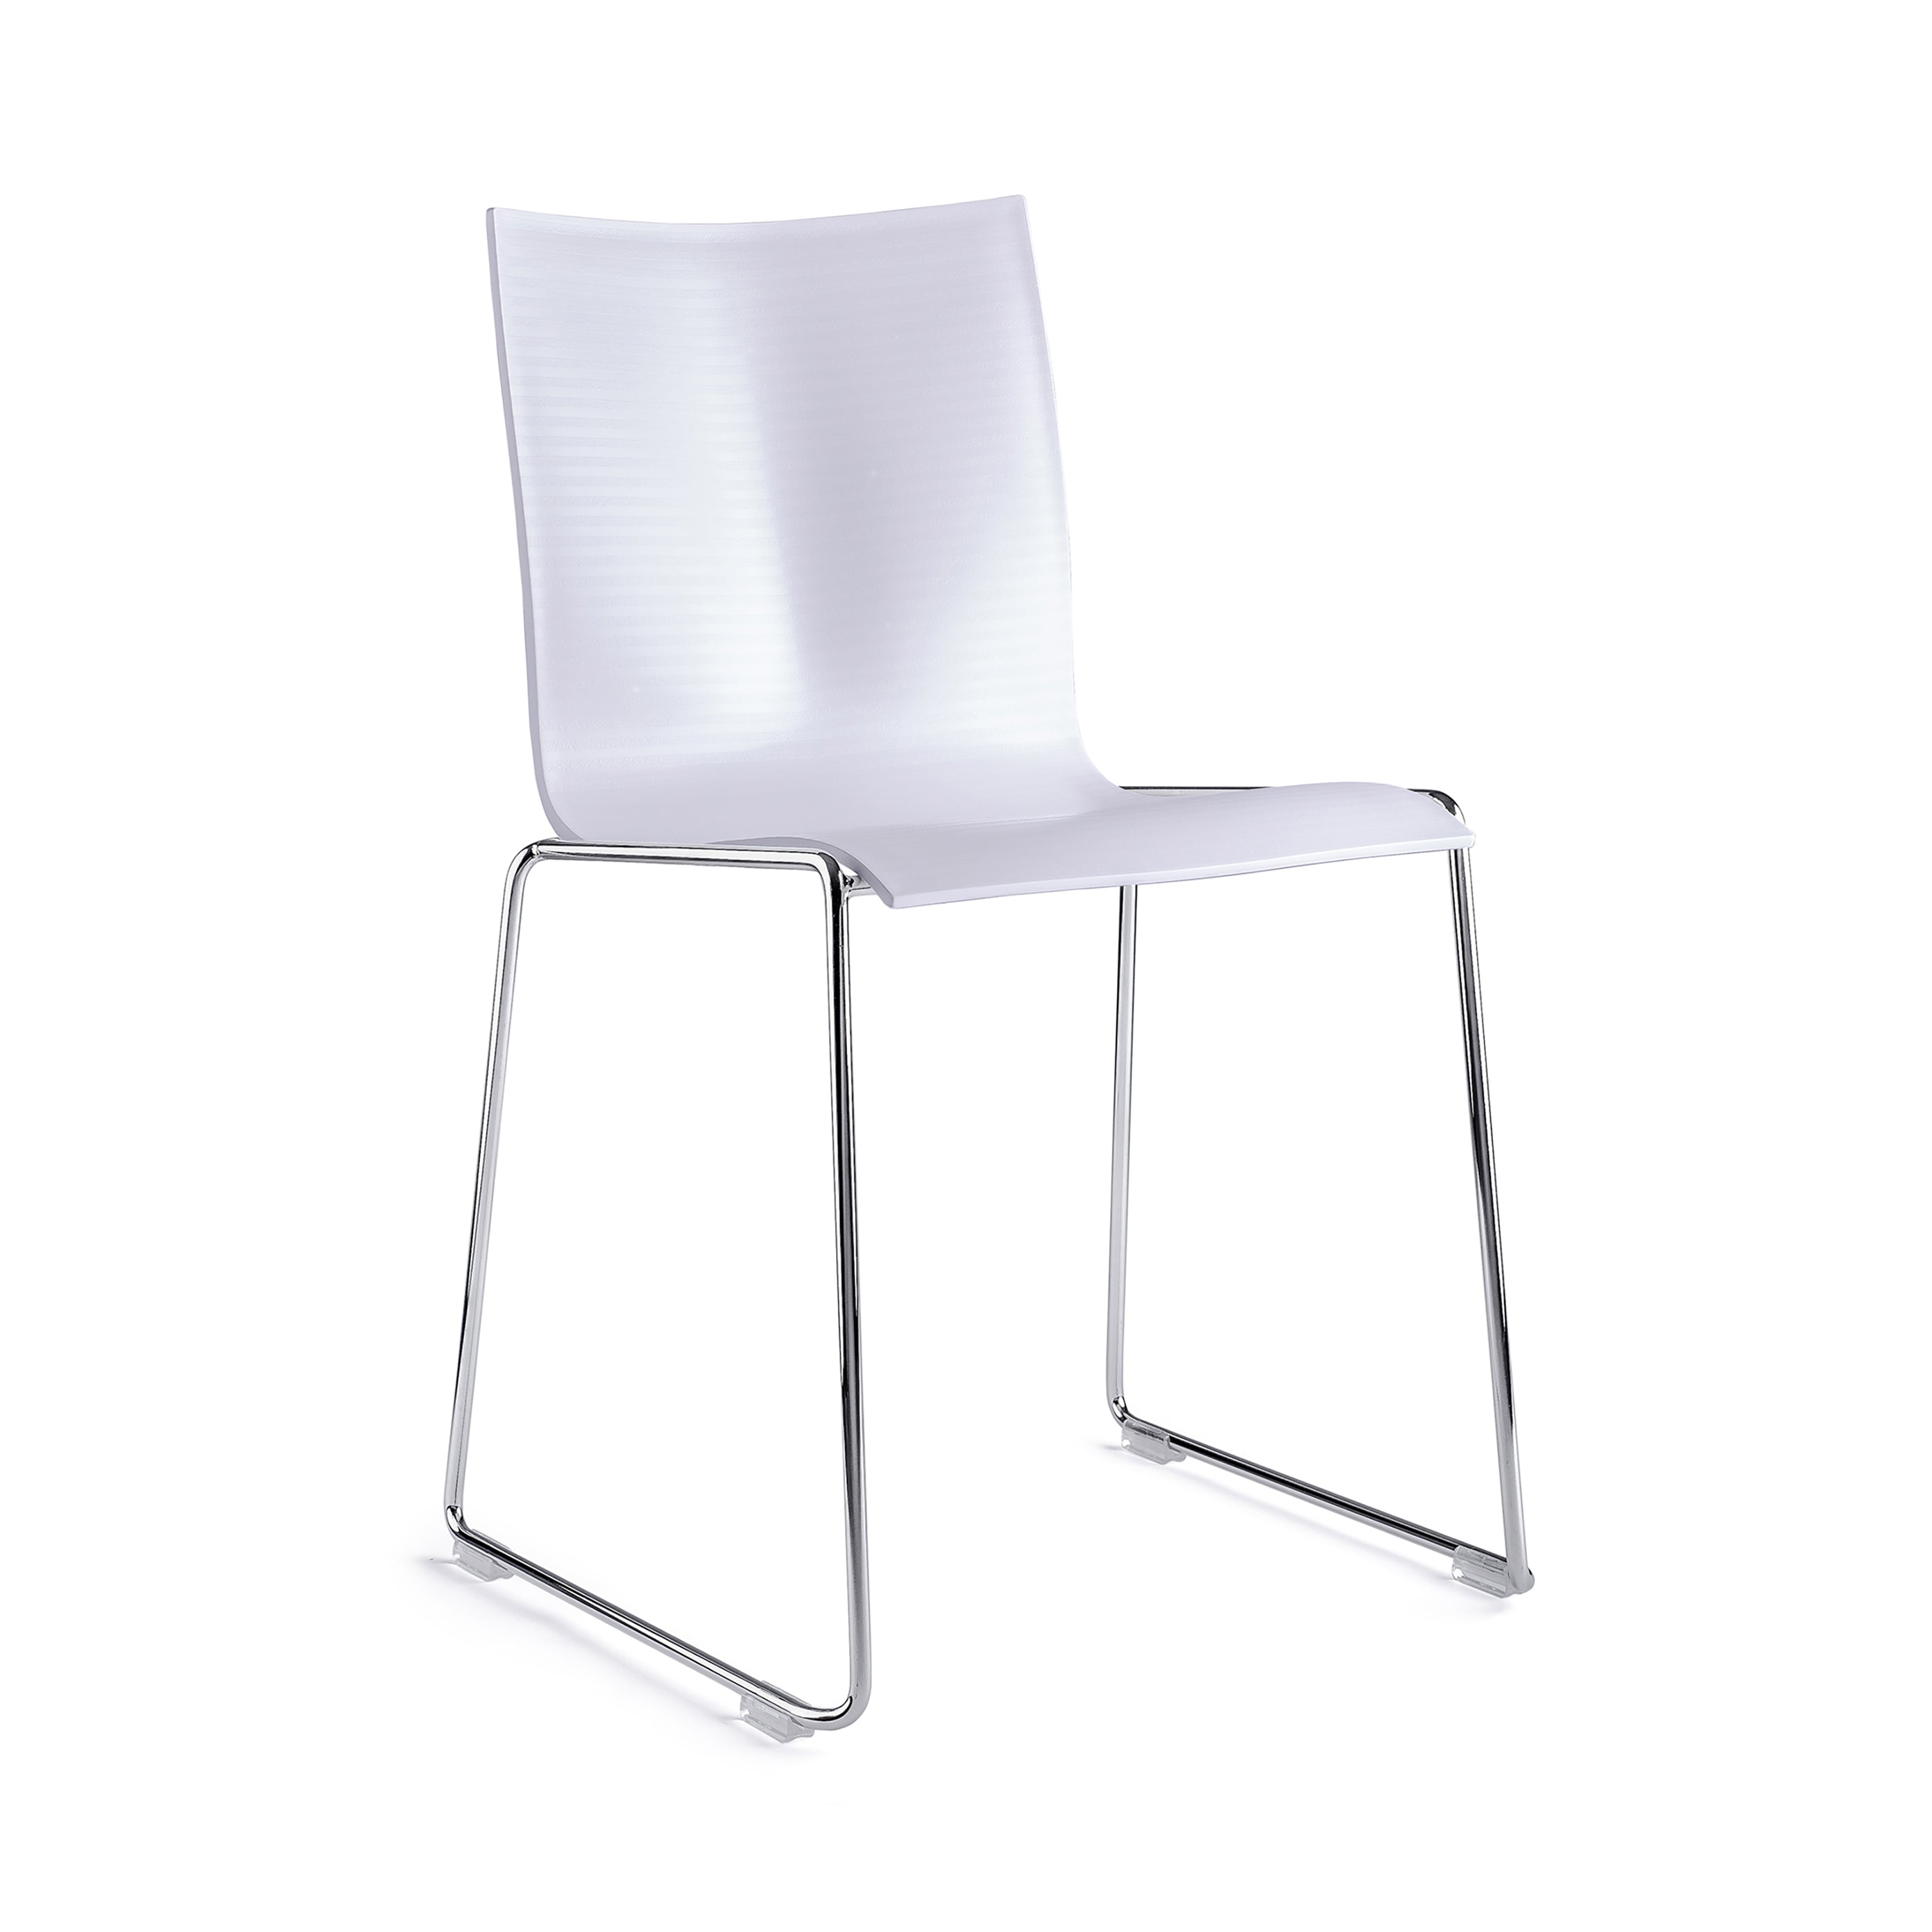 Chairik 107 Chair: Sled Base + Plastic + White + Polished Chrome